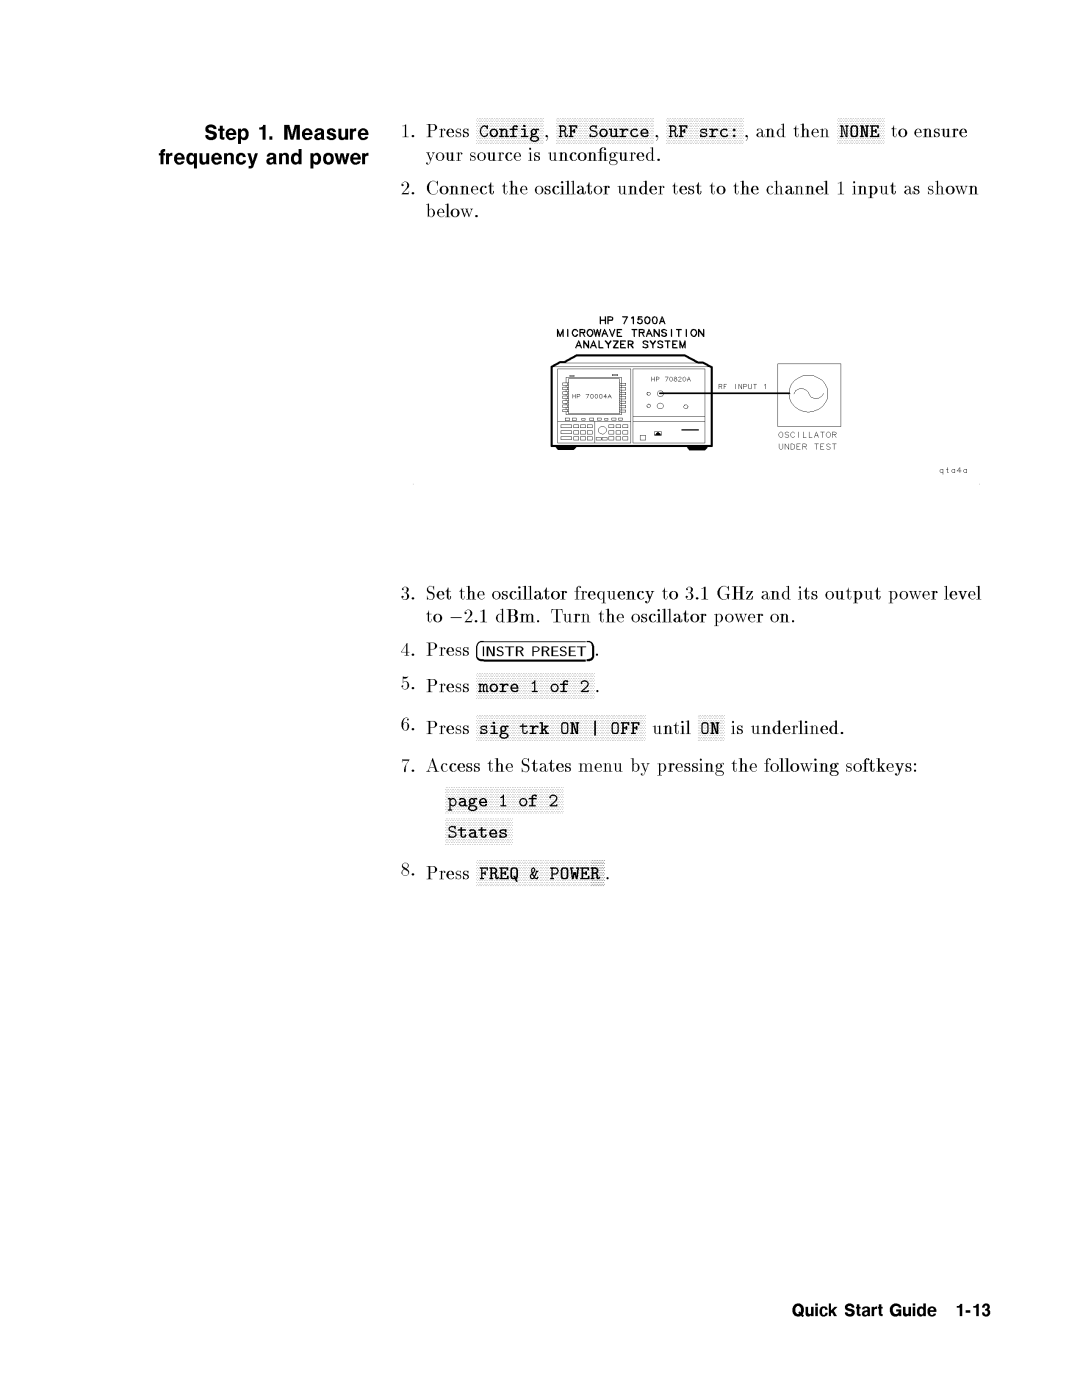 Agilent Technologies 71500A QuickStartGuide1-13, softkeys, below, urntheoscillatorpoweron, Settheoscillatrfrequncy, page1 